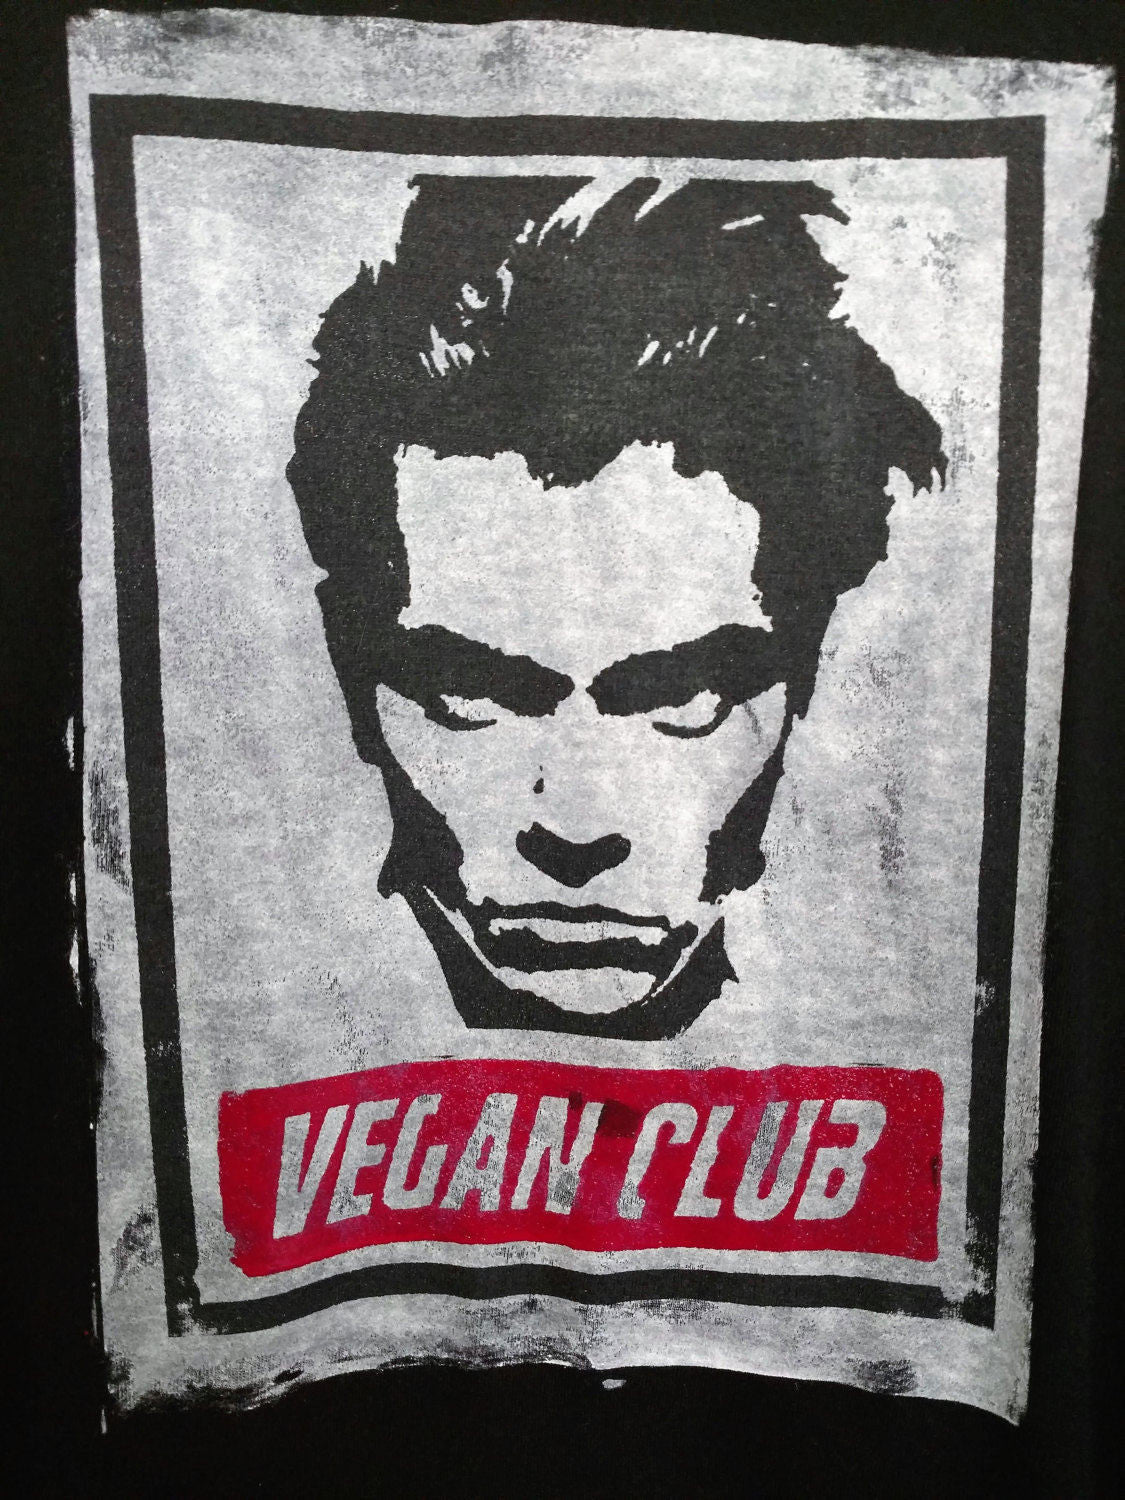 Organic Made in USA T-shirt "Vegan Club" featuring River Phoenix handmade by L3f0u